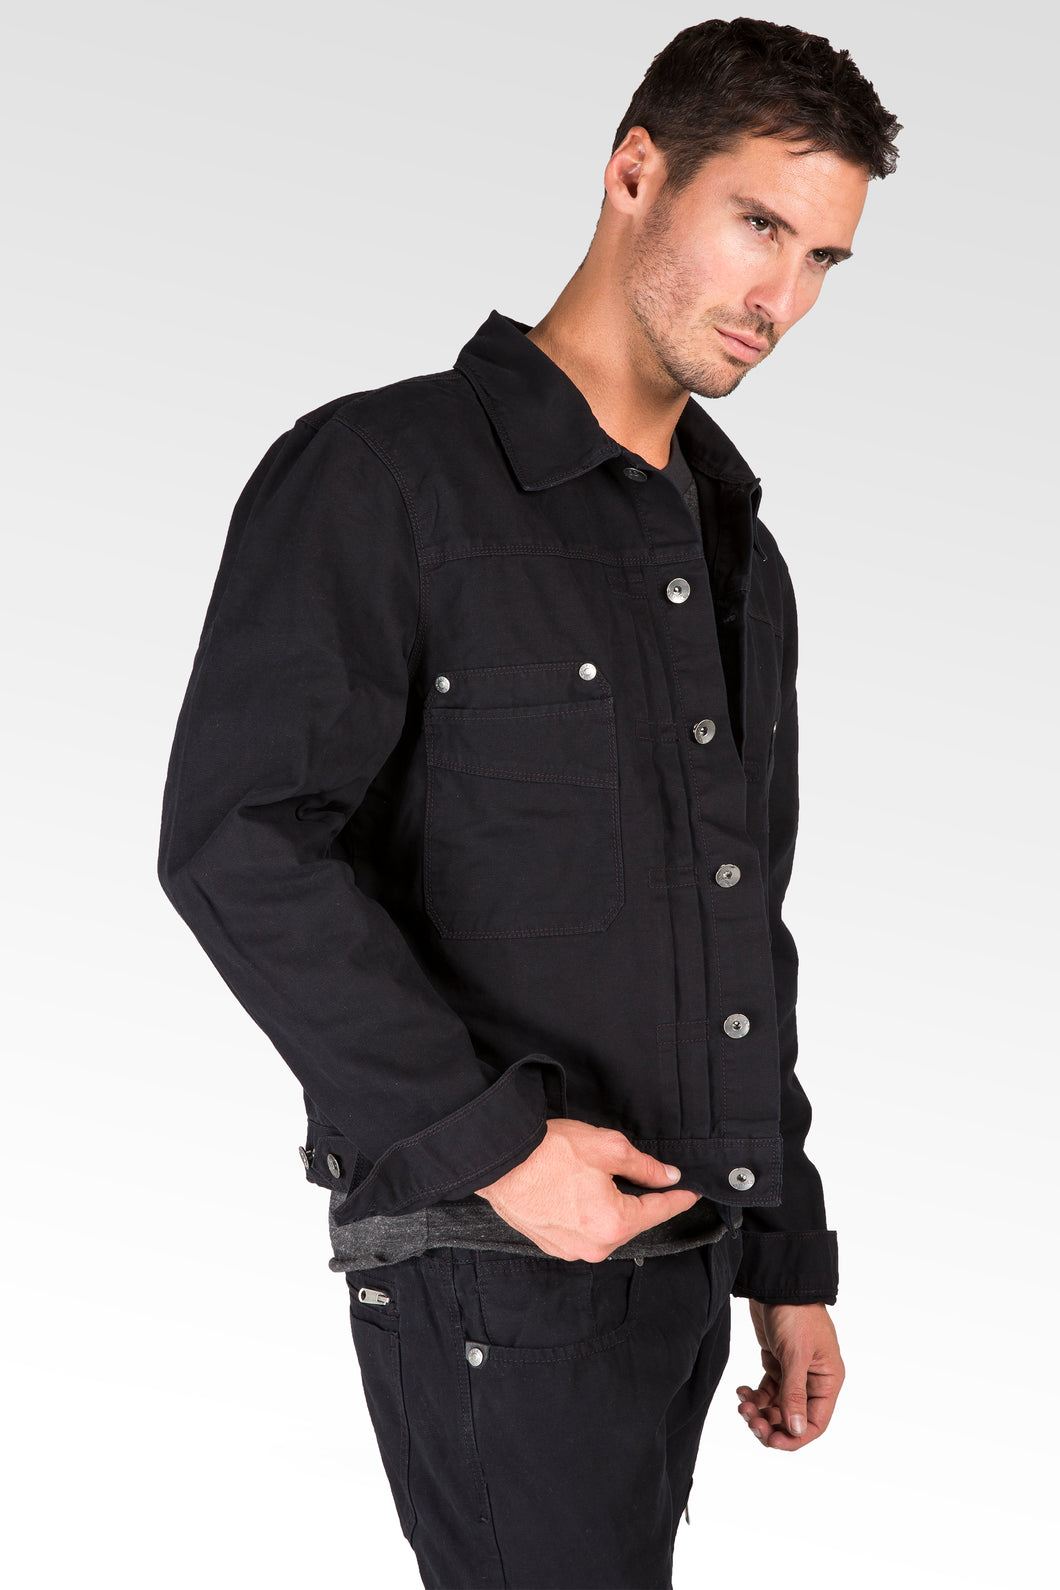 Level 7 Men's Black Canvas Trucker Jacket, 100% Cotton Rugged Wash